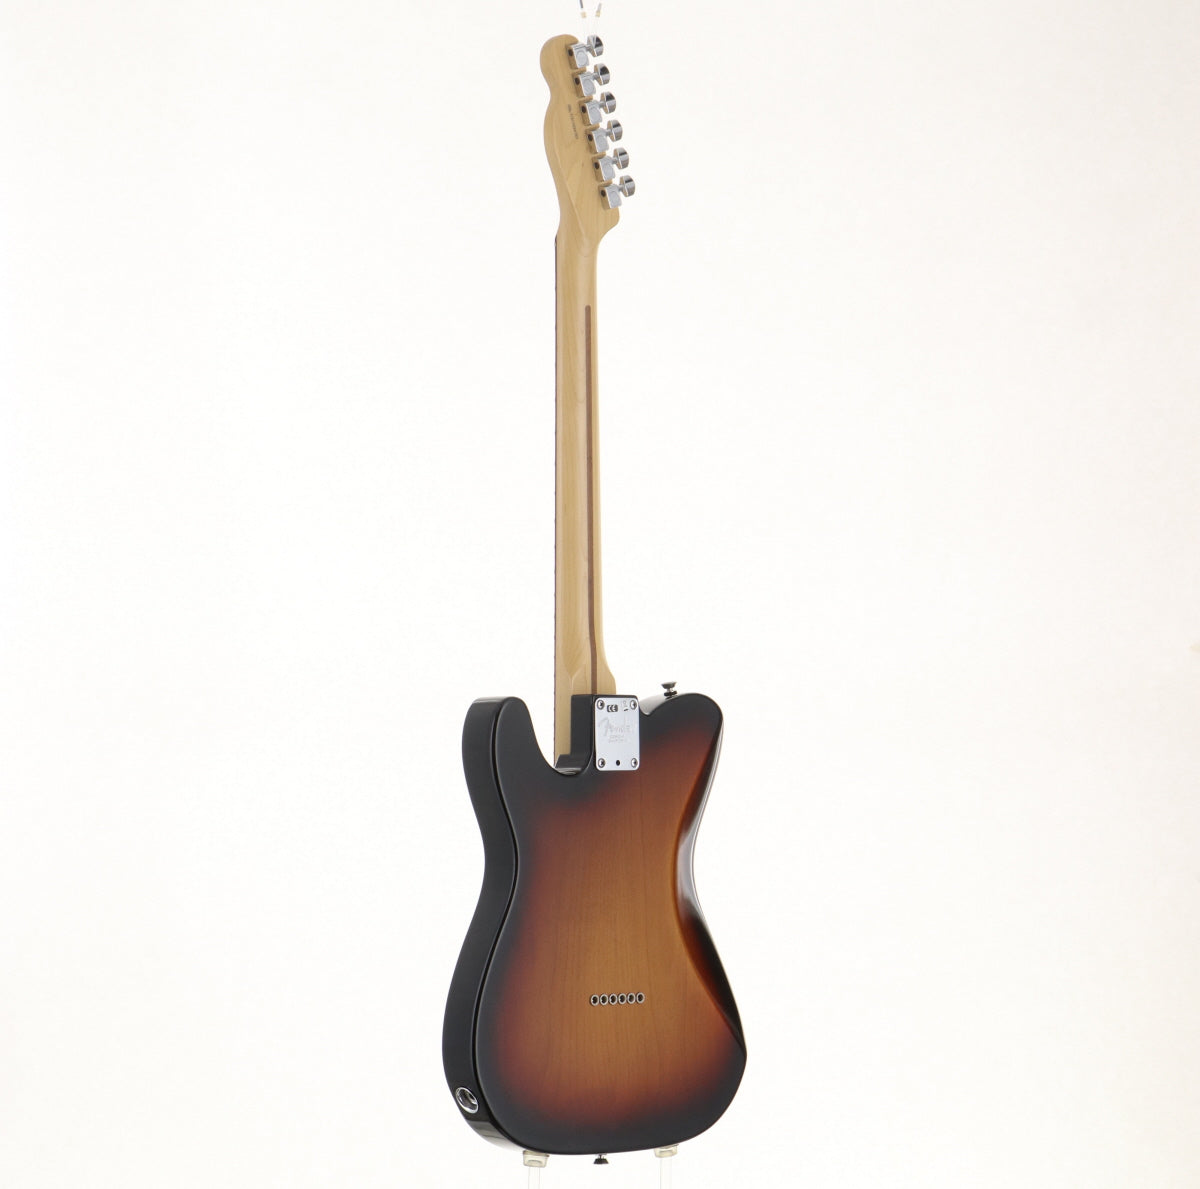 [SN US15034787] USED Fender USA / American Standard Telecaster 3 Tone Sunburst [10]